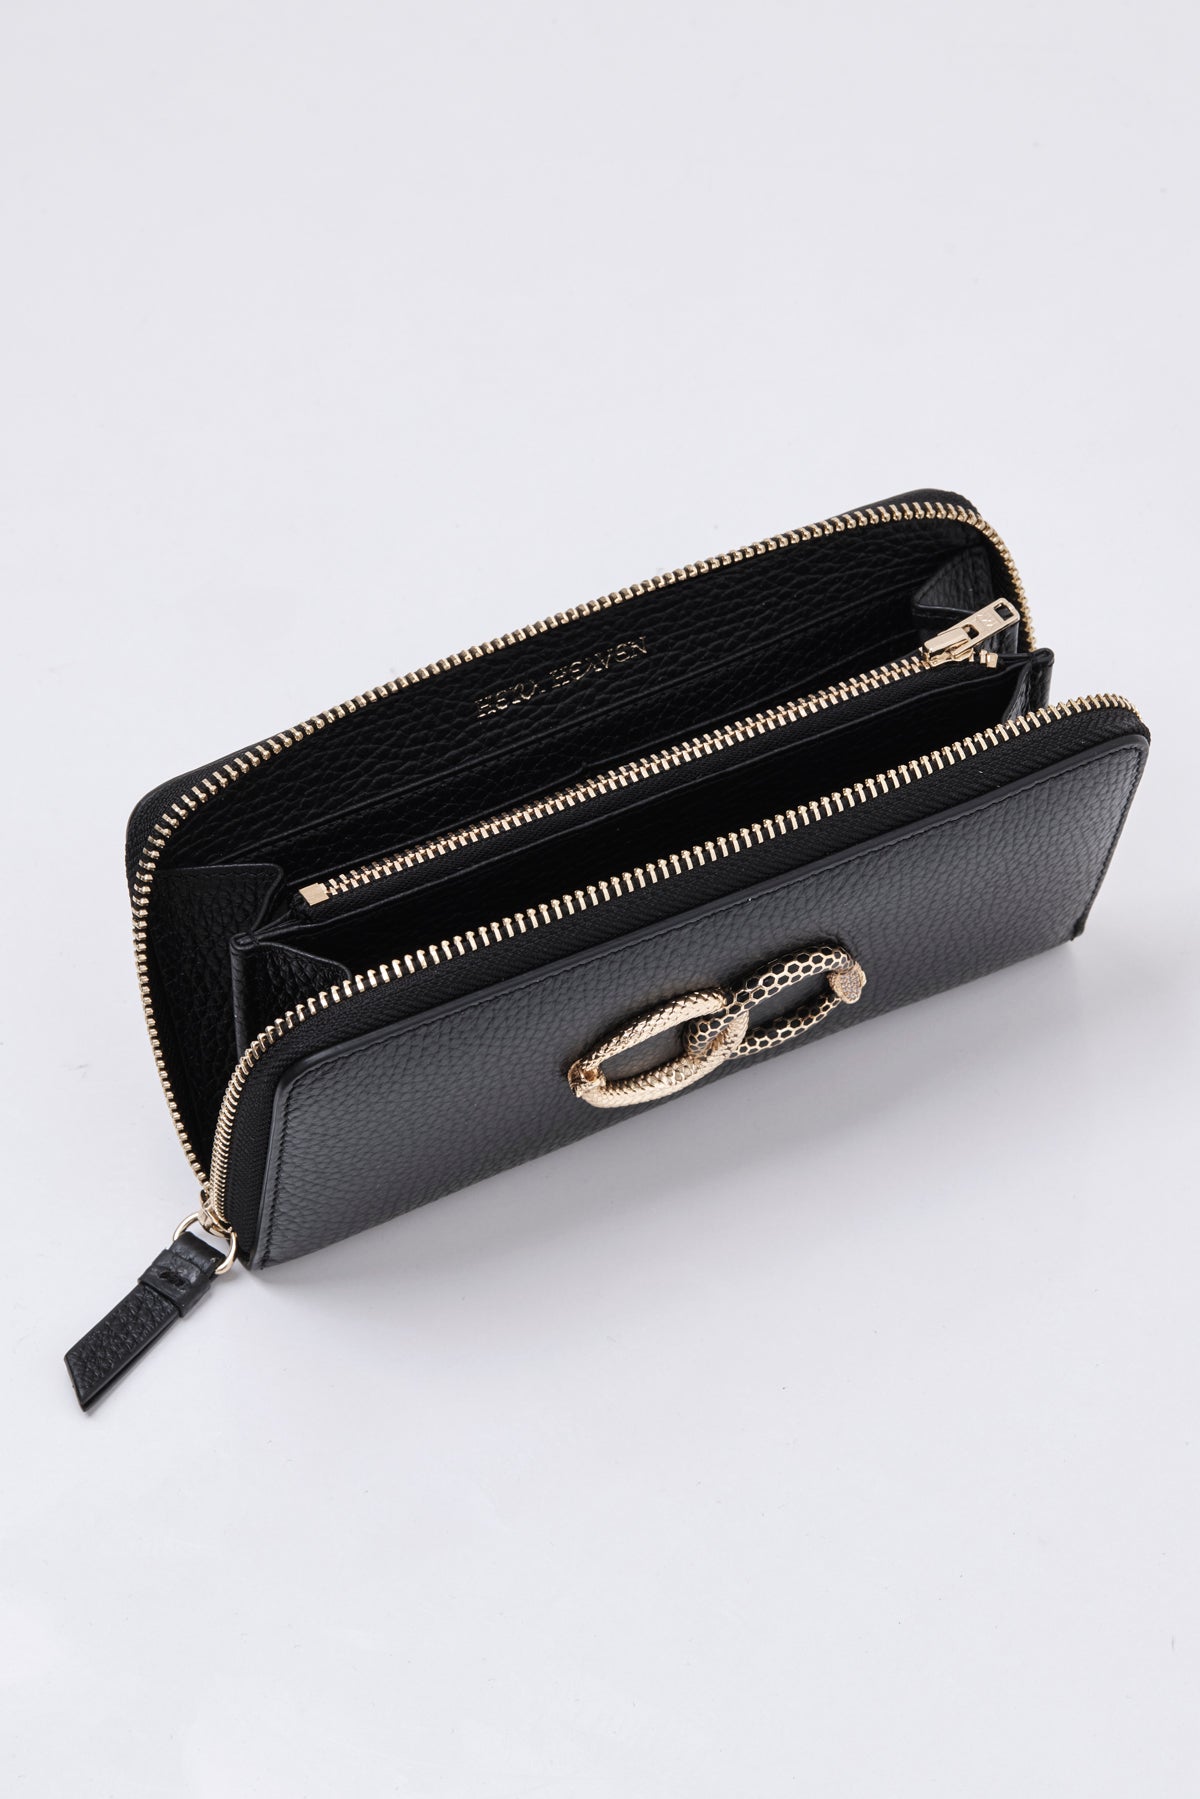 black ouroboros genuine leather women's wallet inside